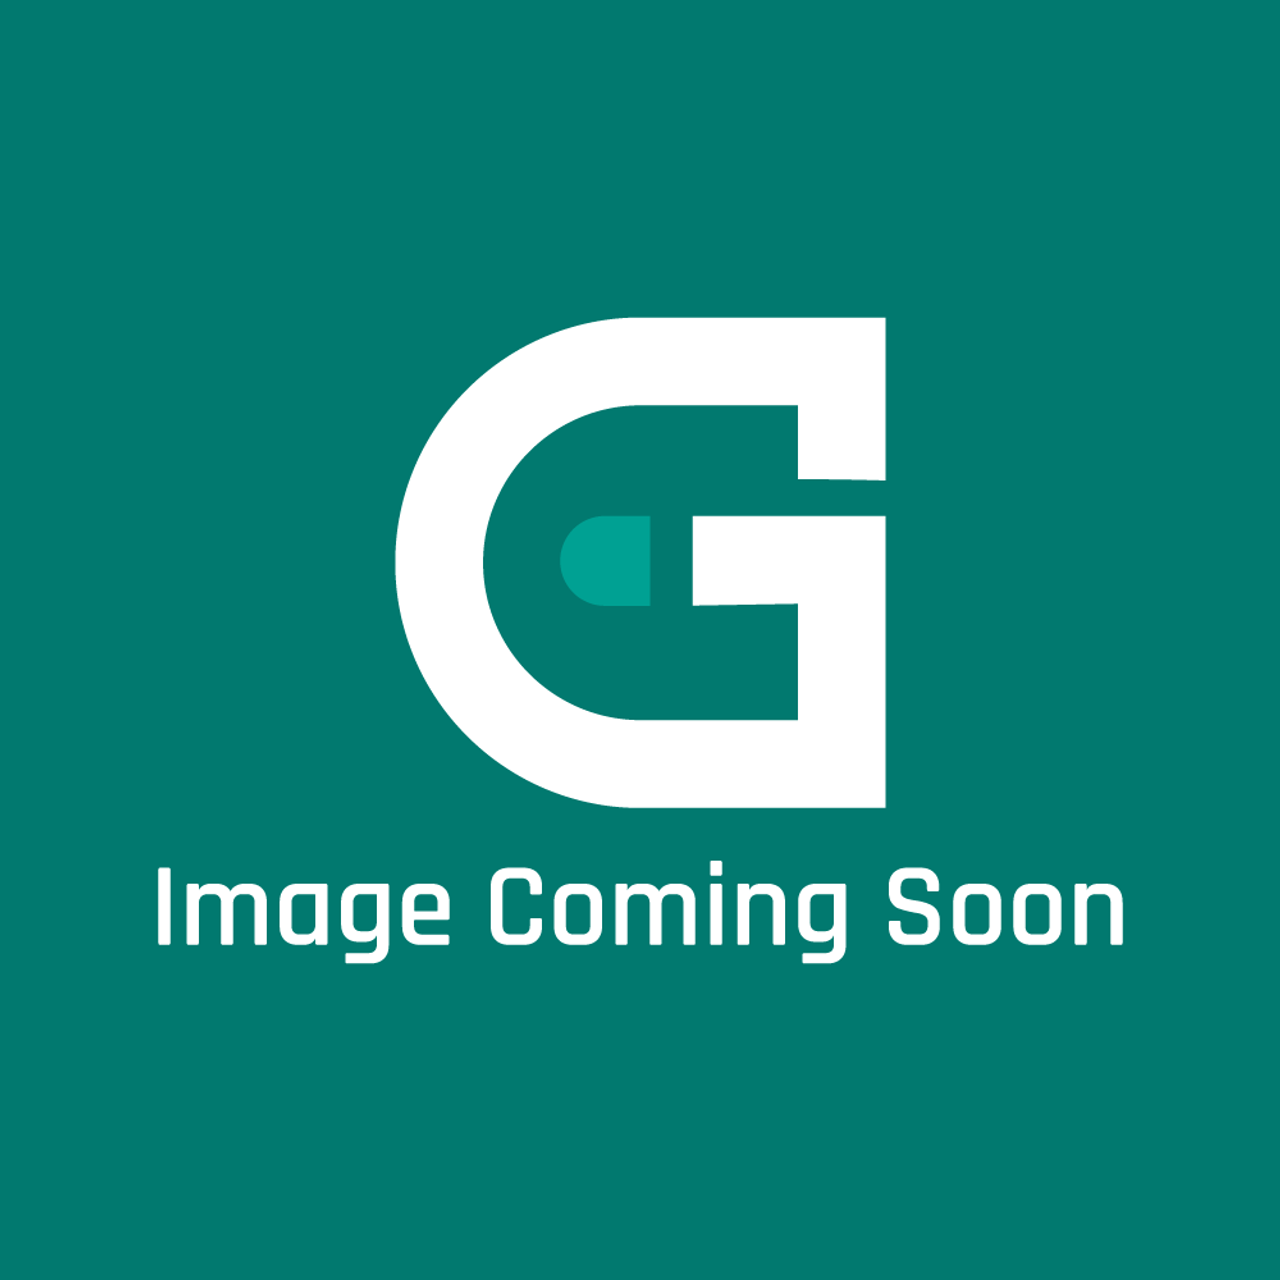 GE Appliances WD21X10084 - SWITCH ROCKER - Image Coming Soon!